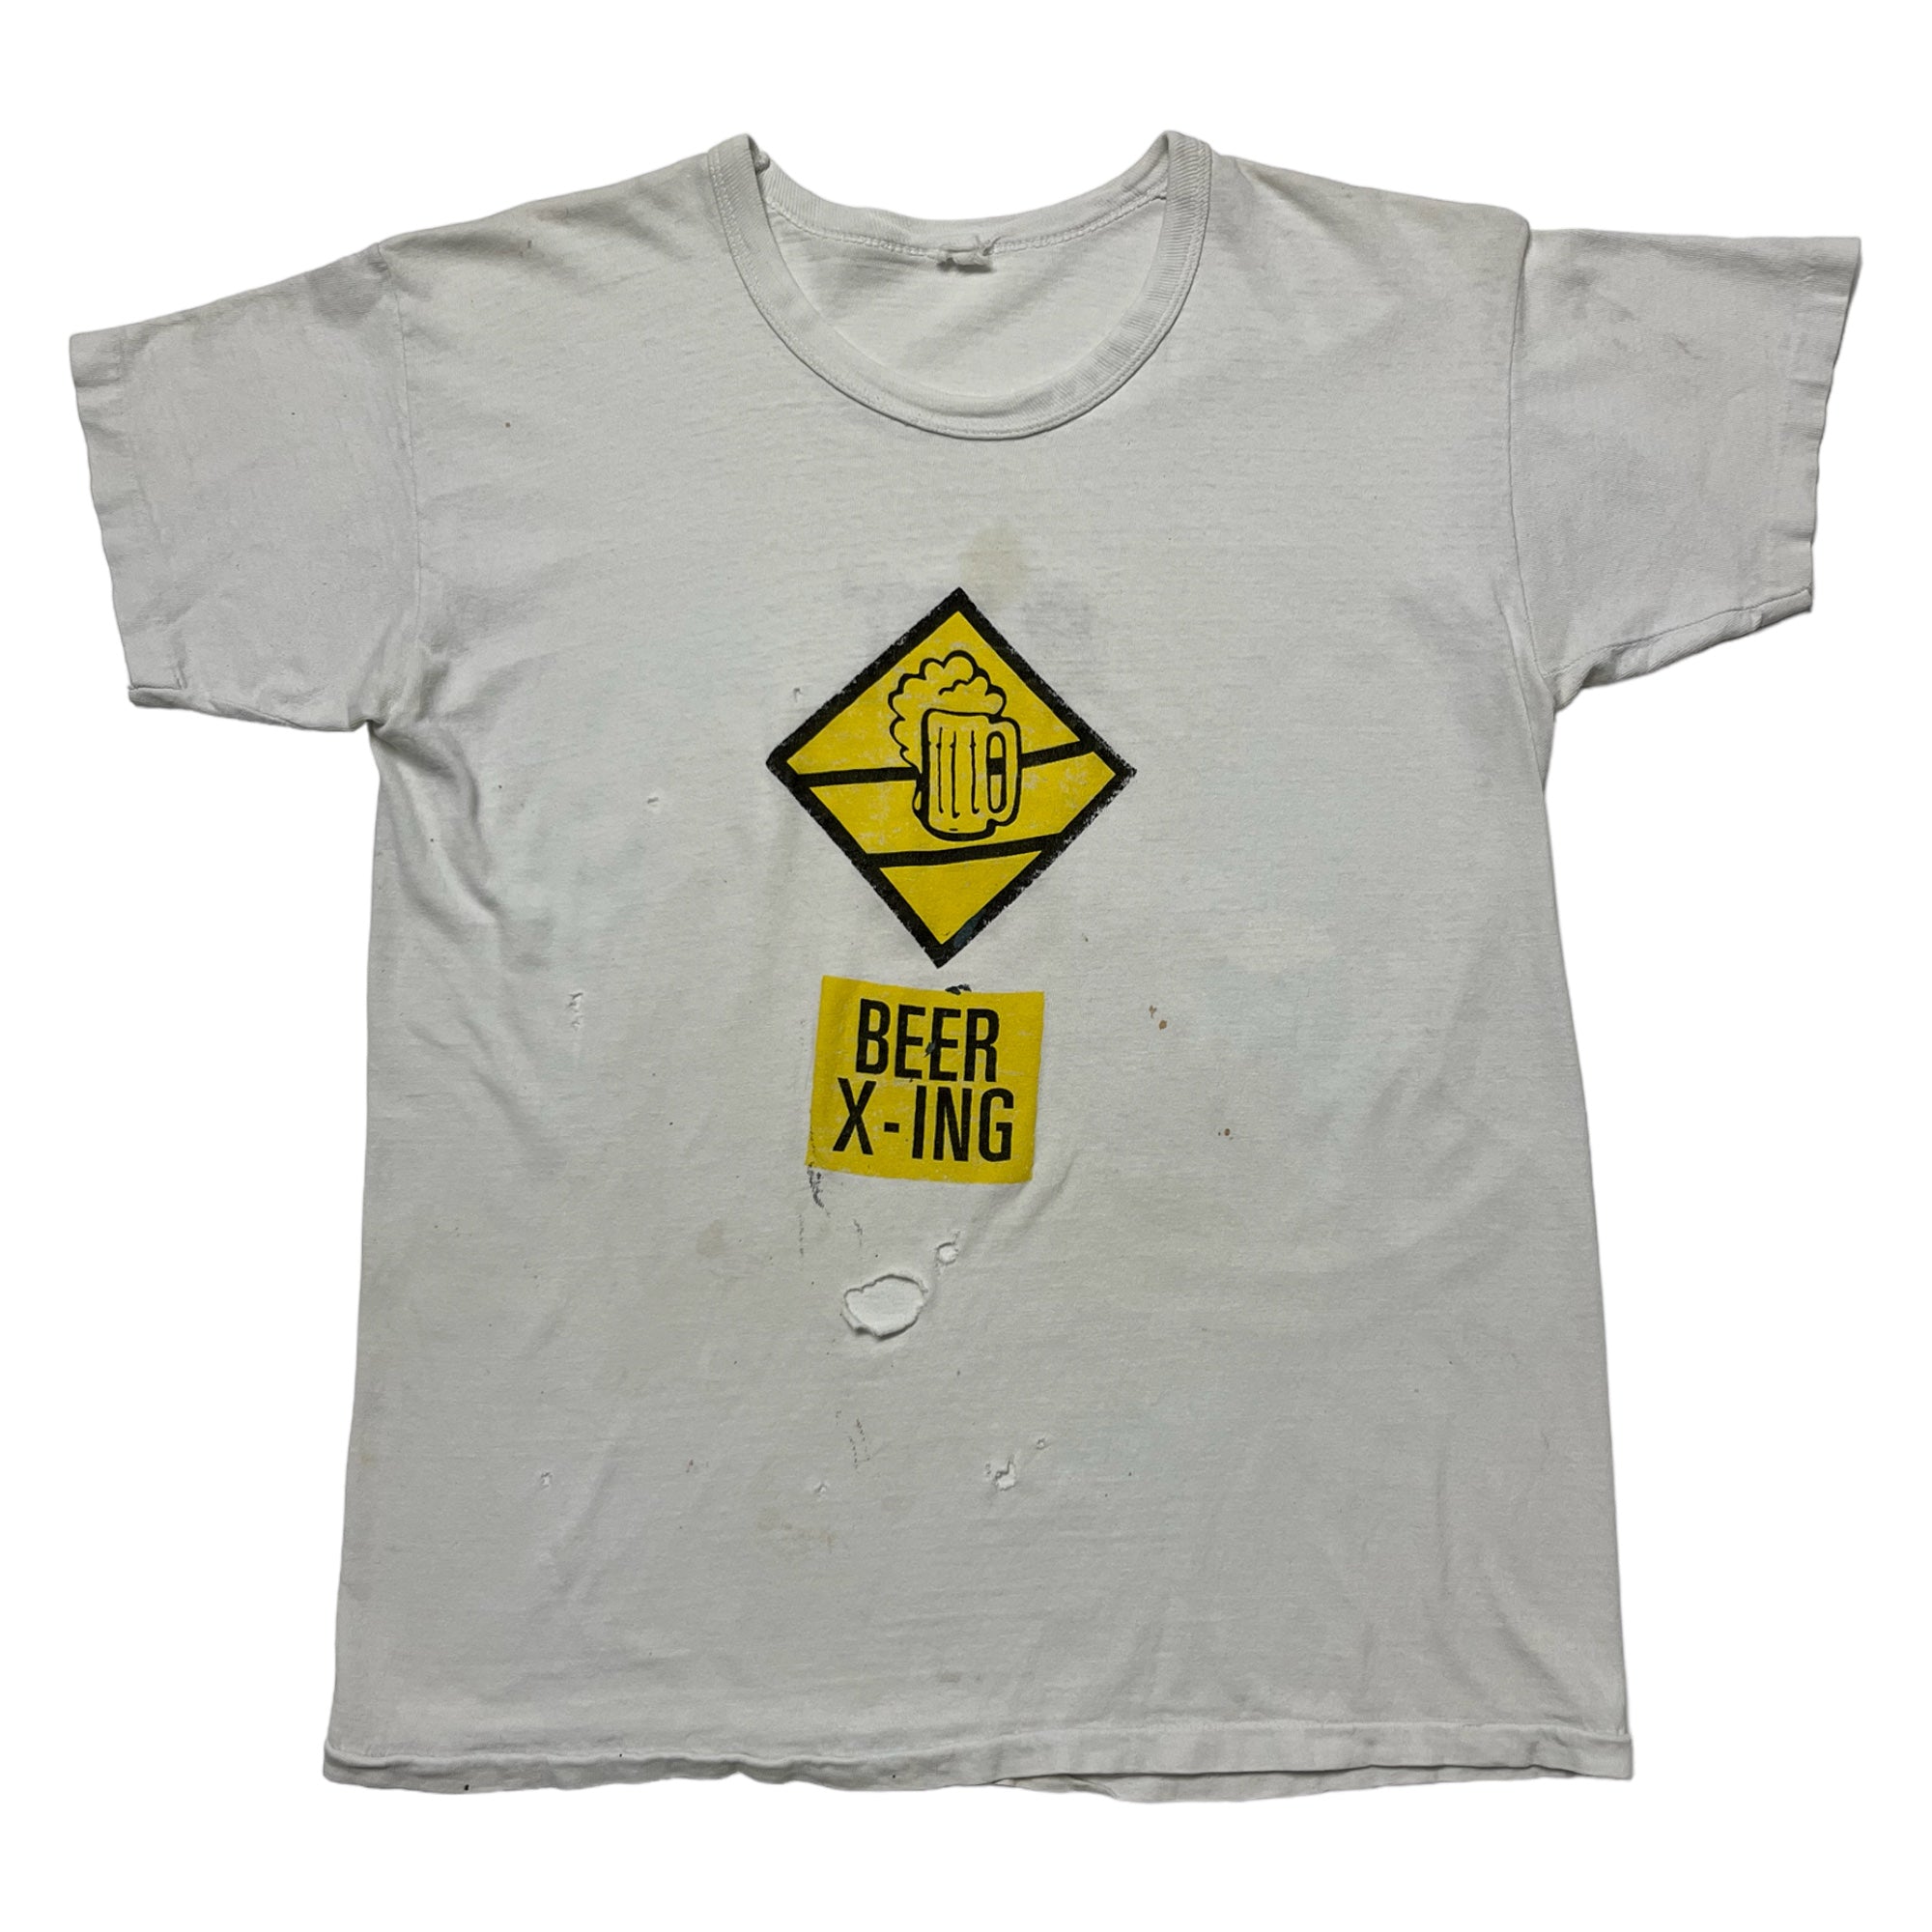 ‘70s Distressed ‘Beer X-ing’ T-Shirt - White - M/L